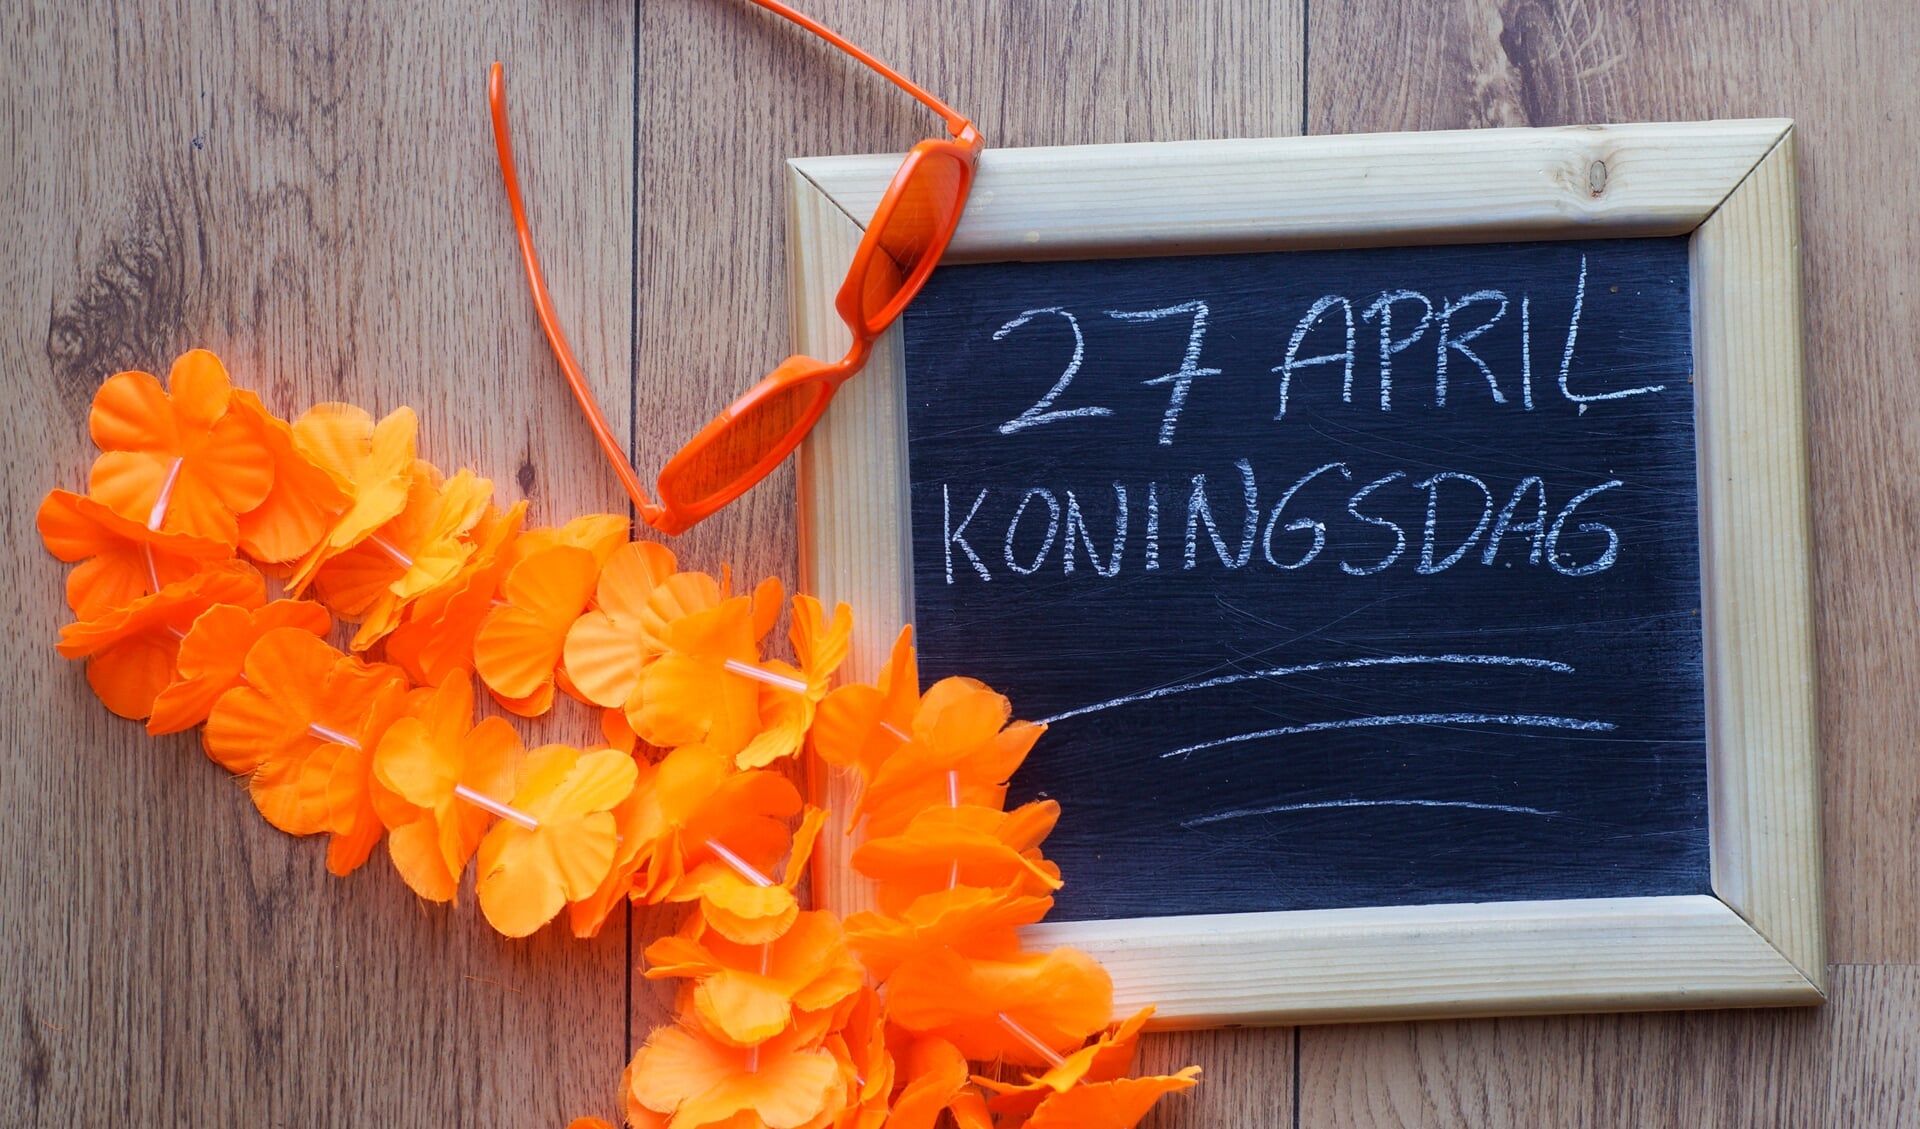 Kingsday written in Dutch for Kingsday in the Netherlands